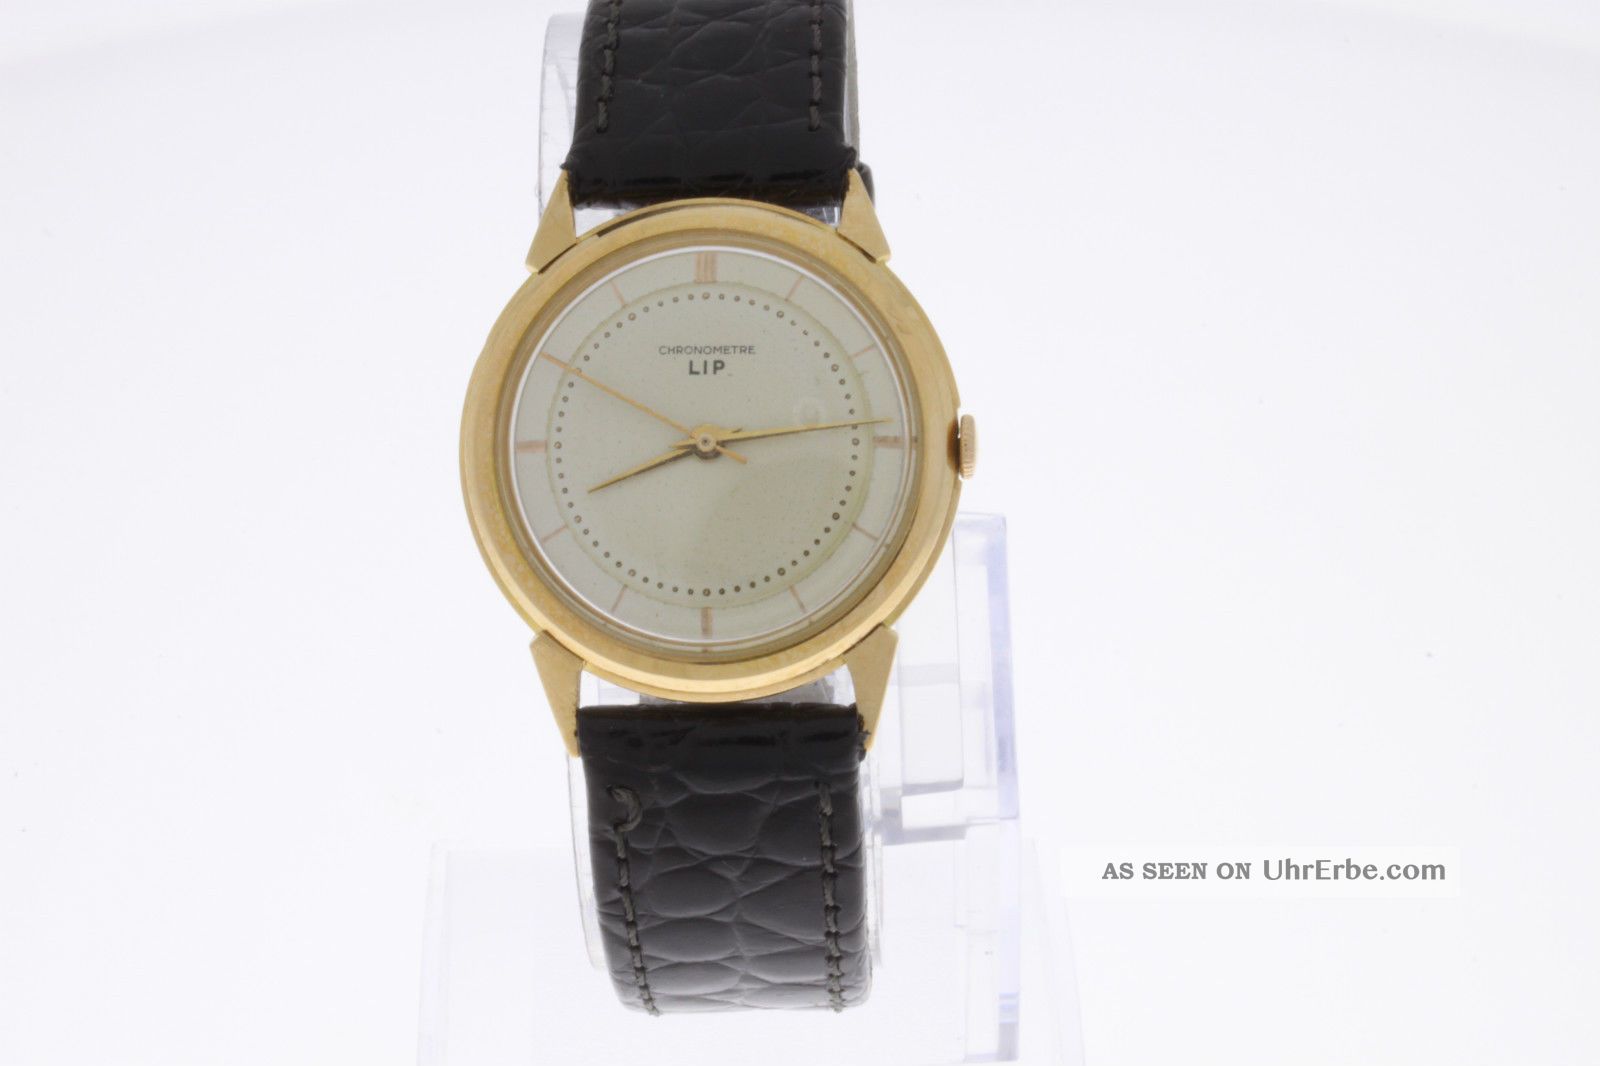 Vintage Lip 18k Gold Chronometer Mit Handaufzug